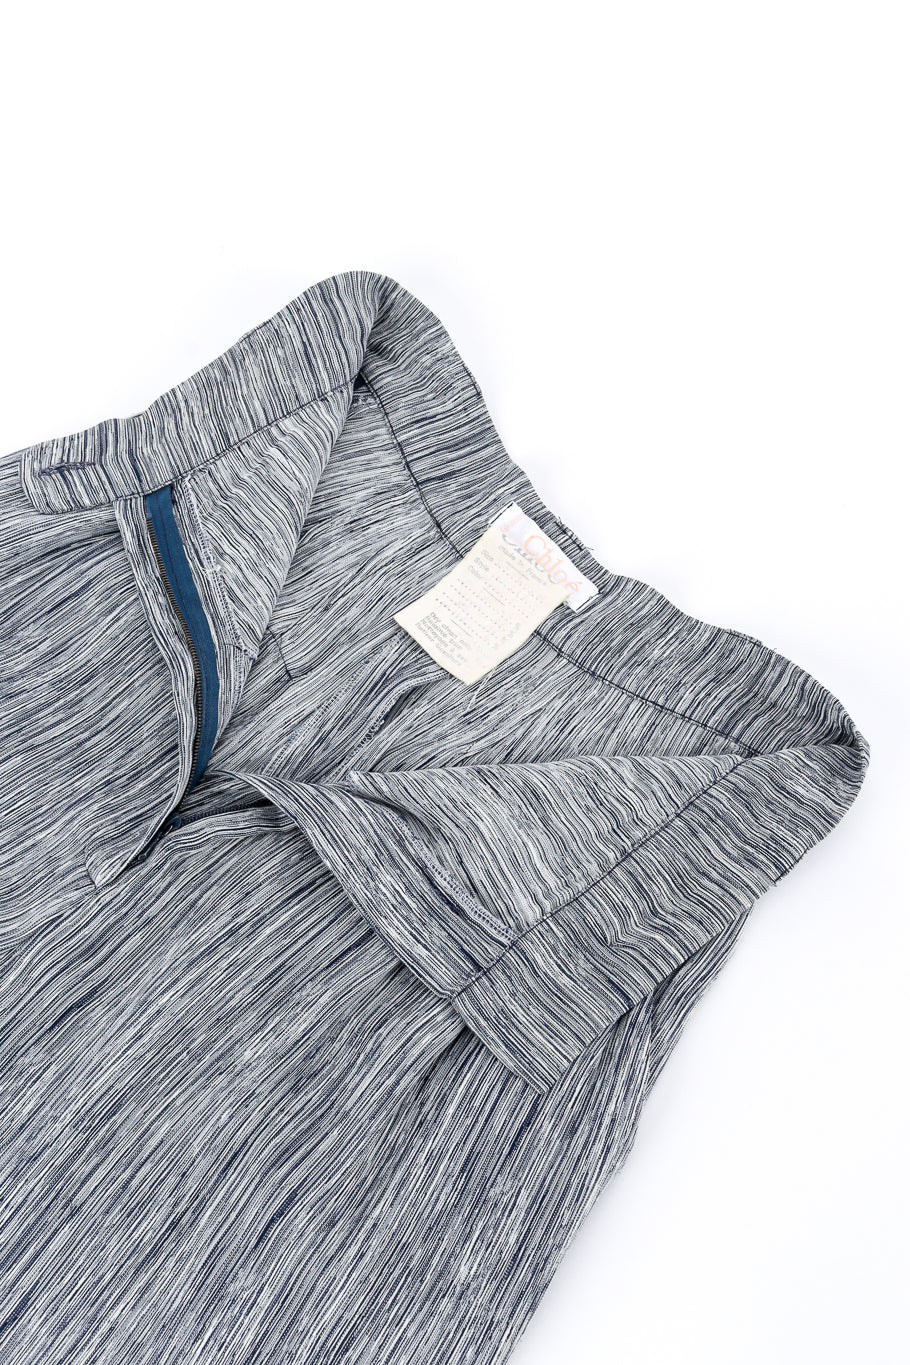 Chloé Woodgrain Stripe Jacket & Pant Set front waist unzipped flat @recess la